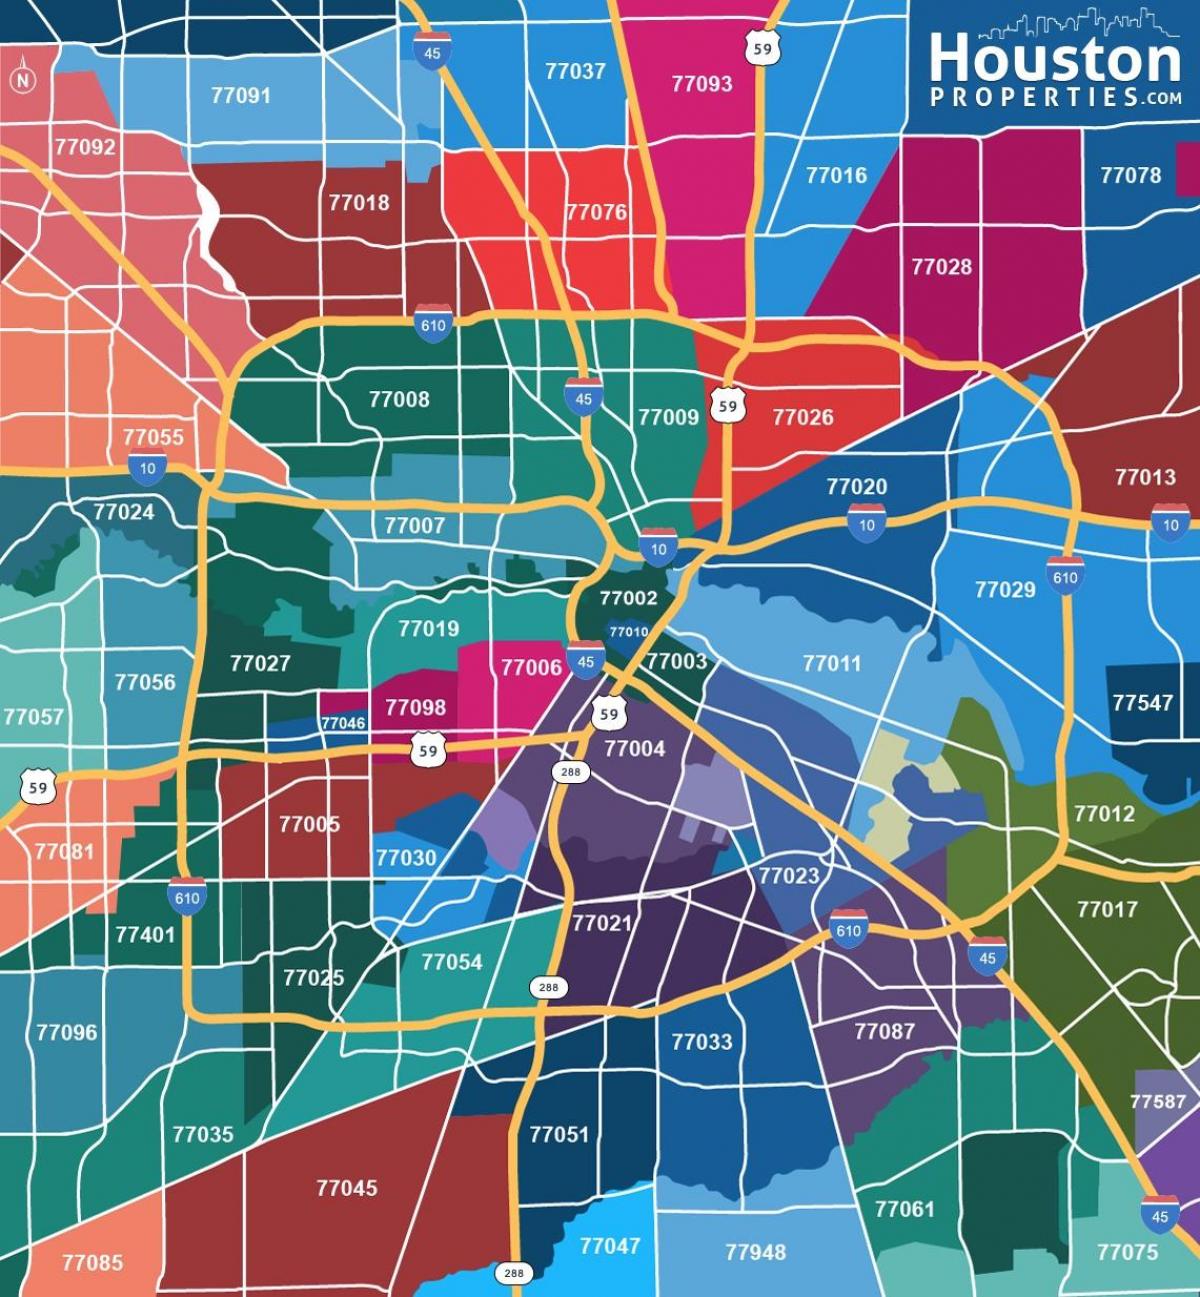 žemėlapis Houston texas srityje